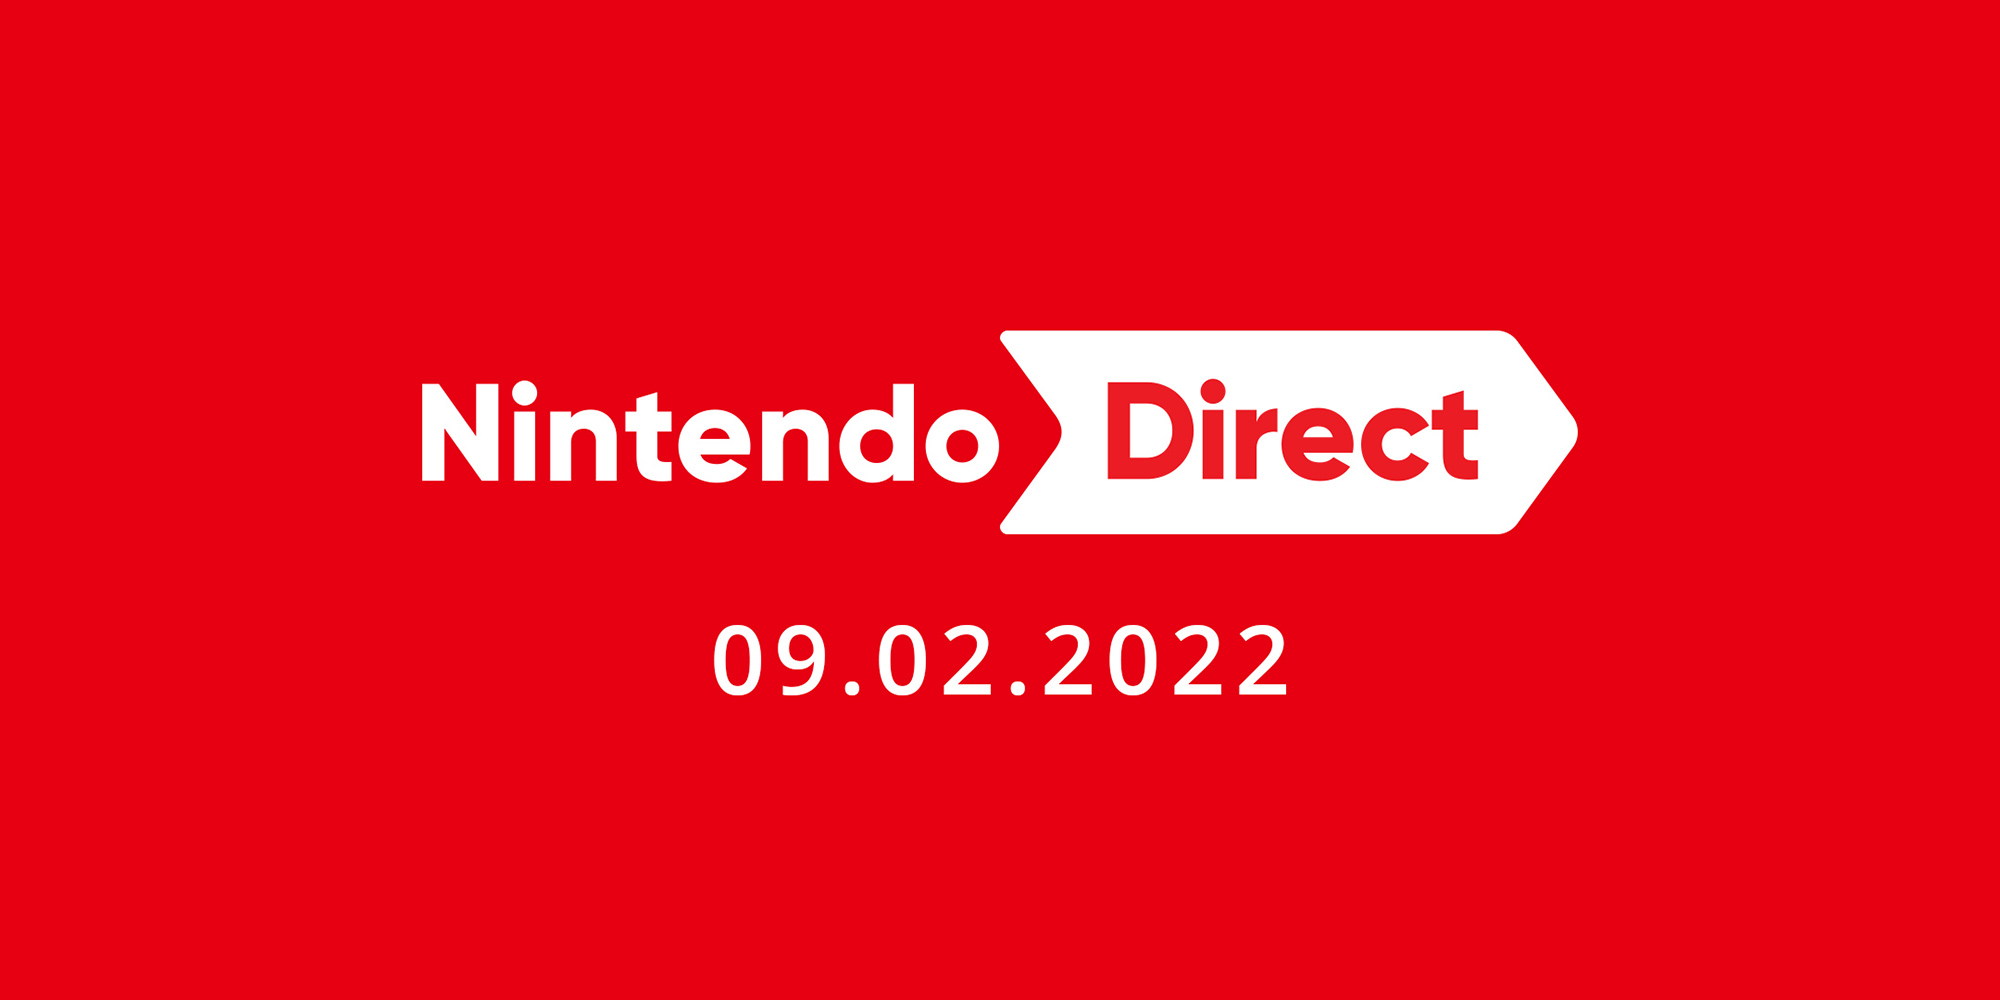 Die Highlights der Nintendo Direct - Februar